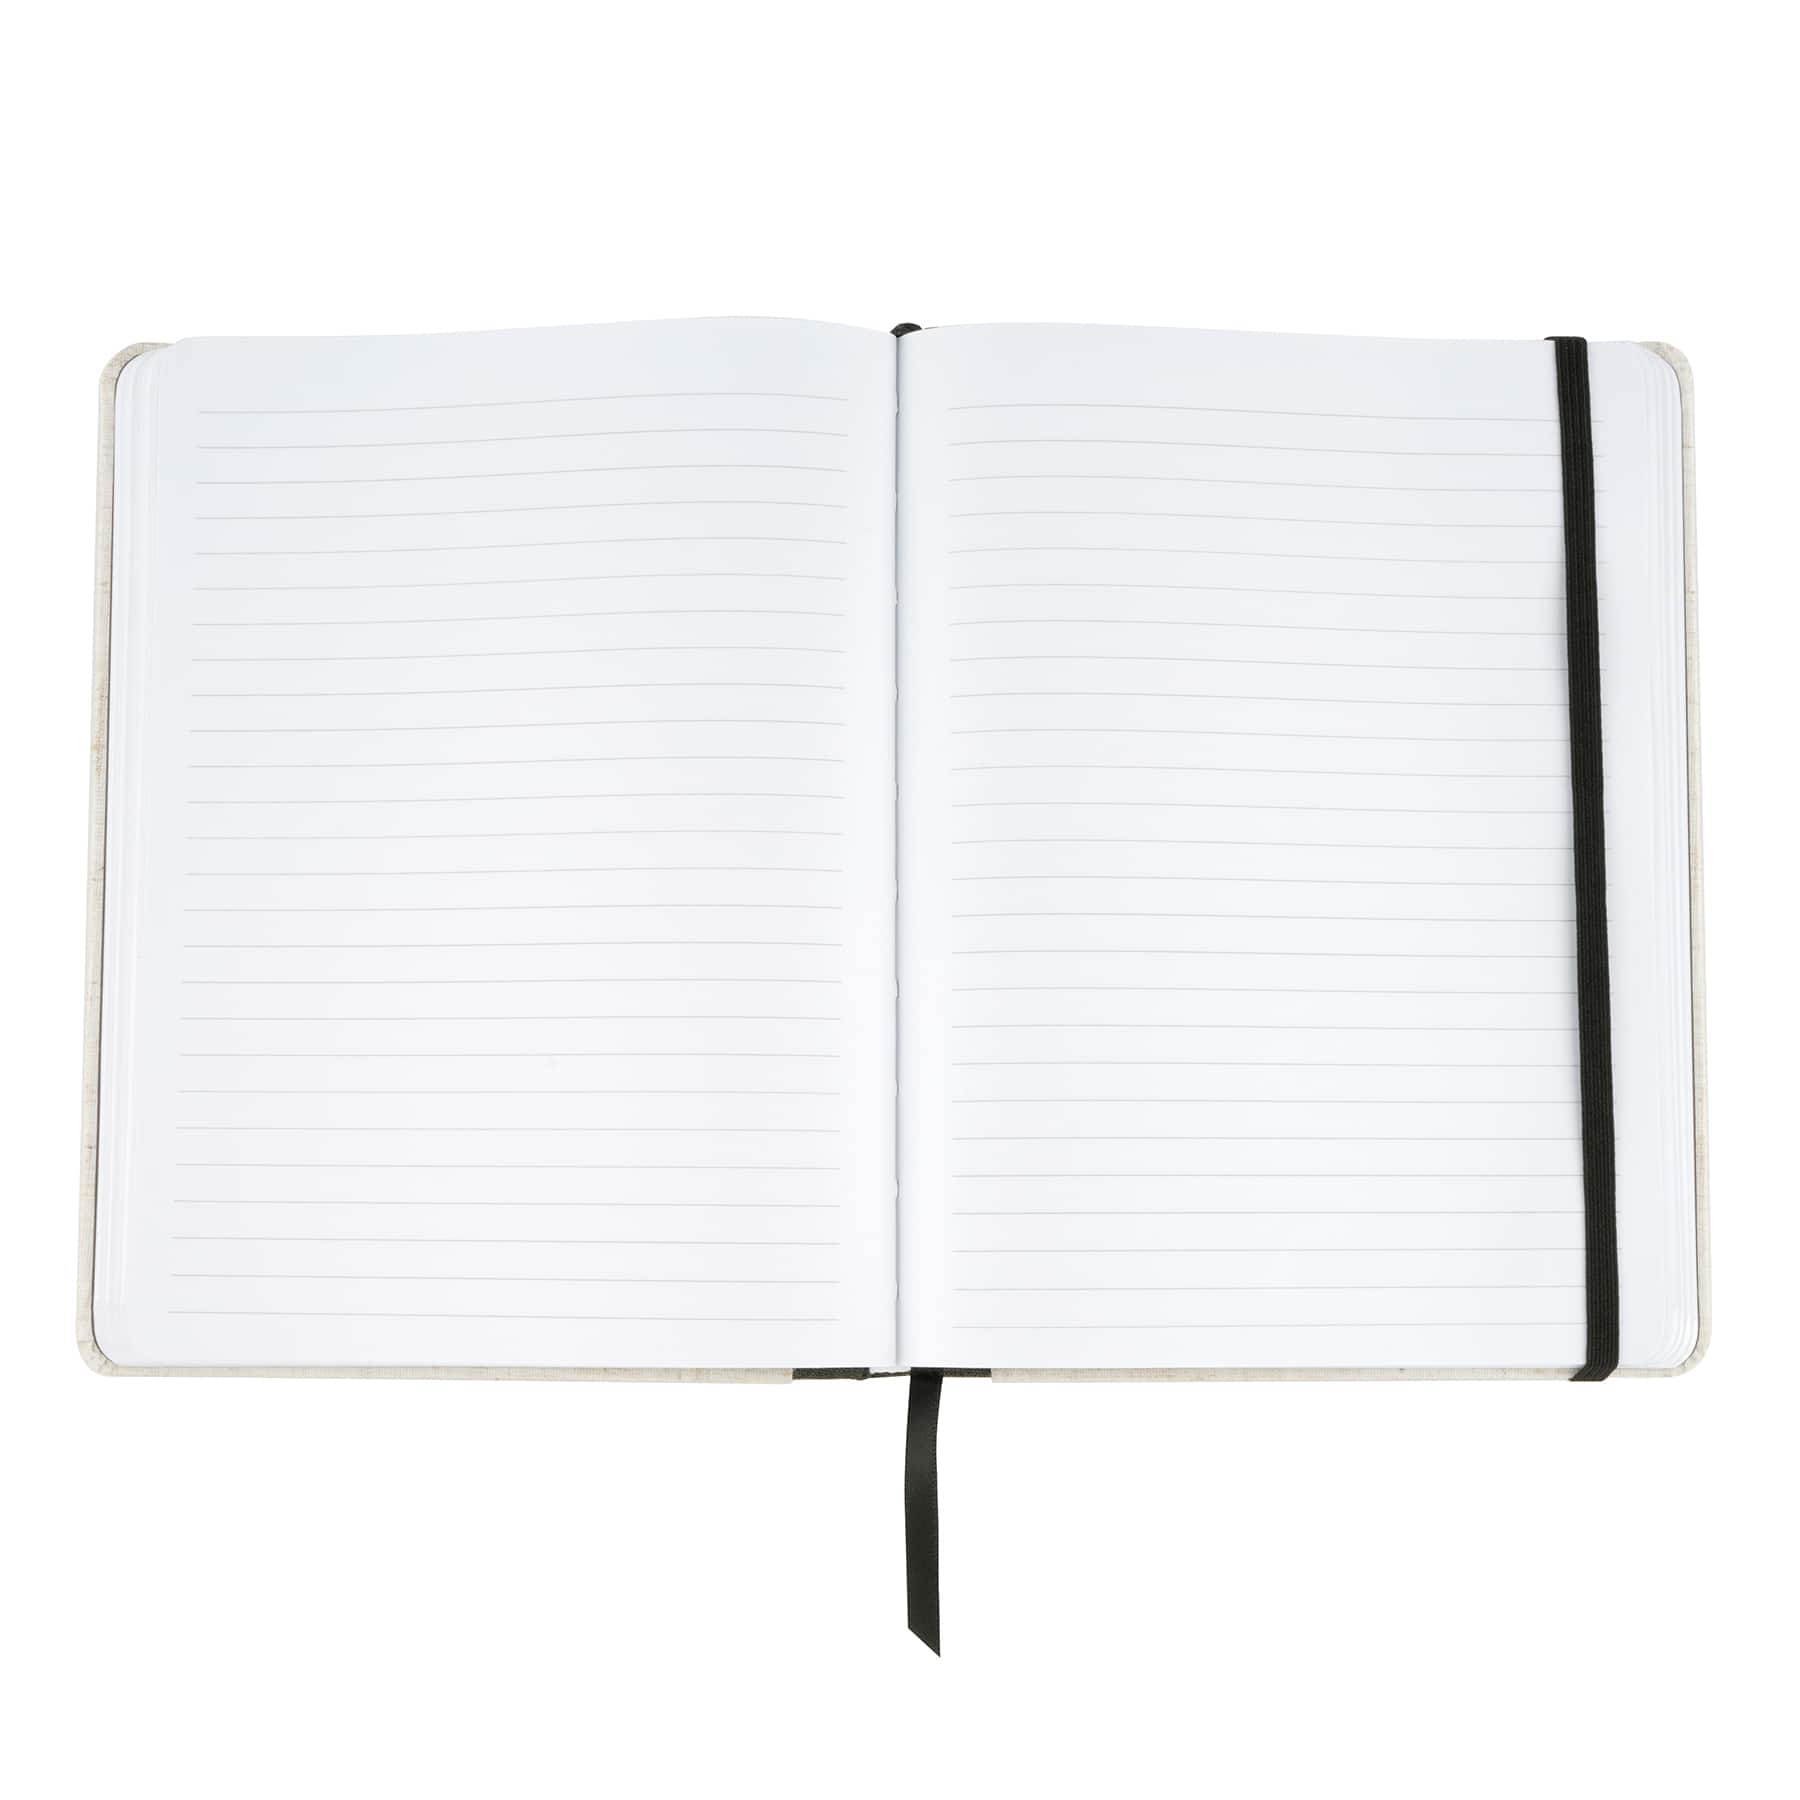 12 Pack: Flecked White Linen Journal by Artist&#x27;s Loft&#x2122;